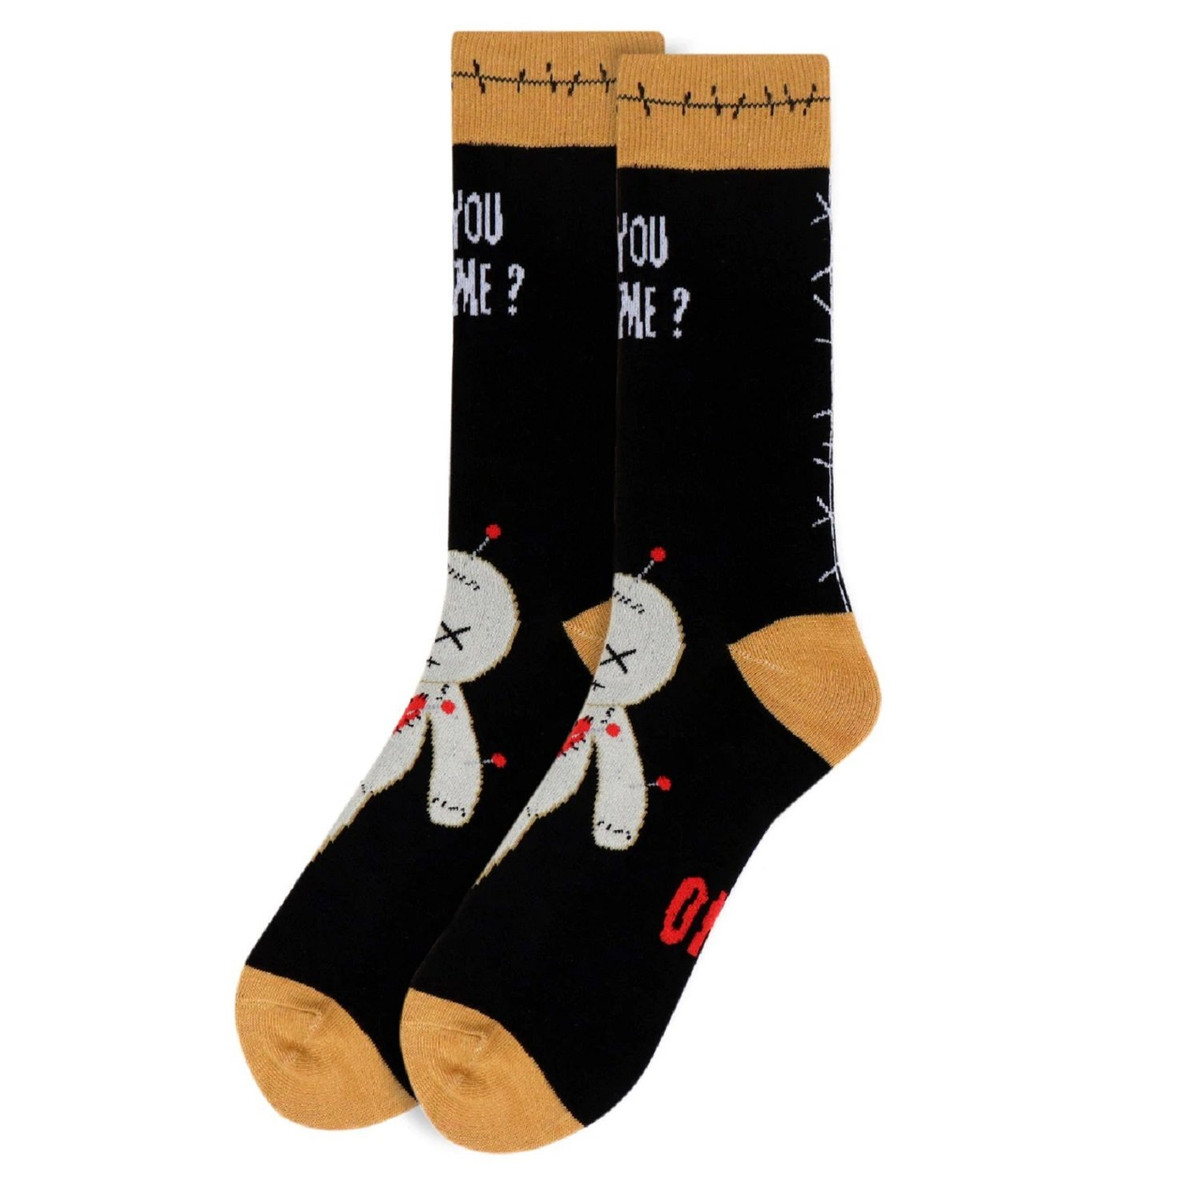 Pair of Men's Voodoo Doll Crew Novelty Socks - Black